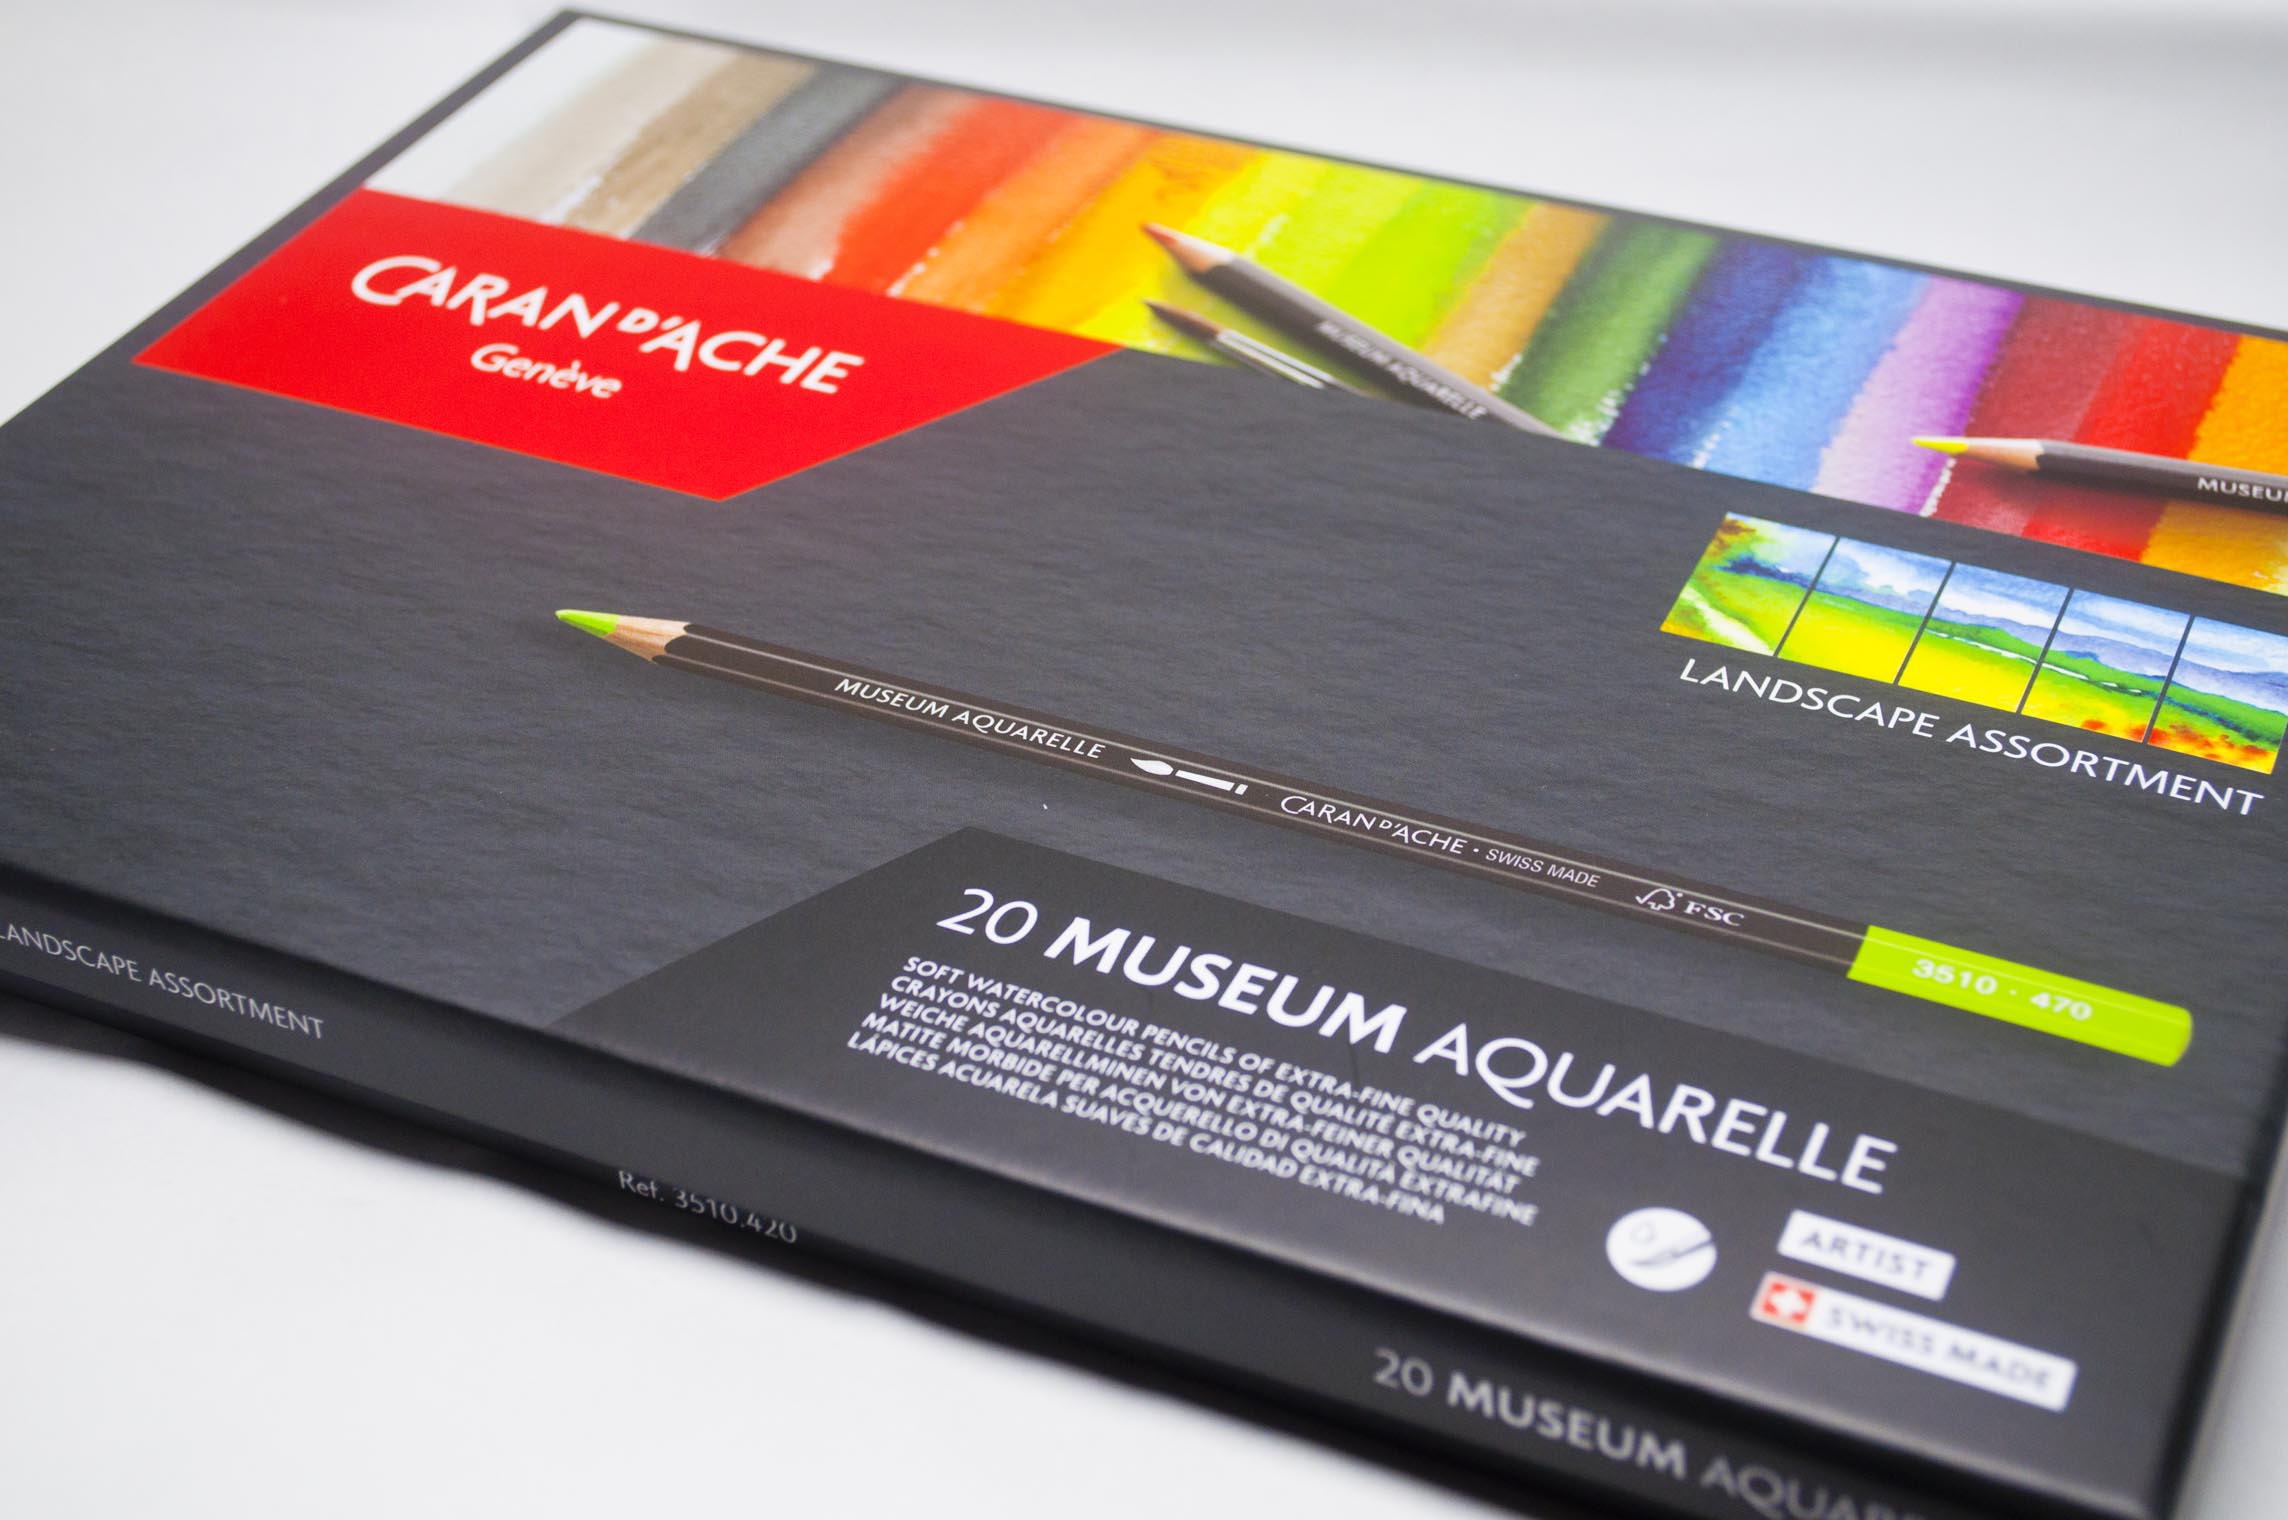 Caran dAche Museum Aquarelle 40 Pencils